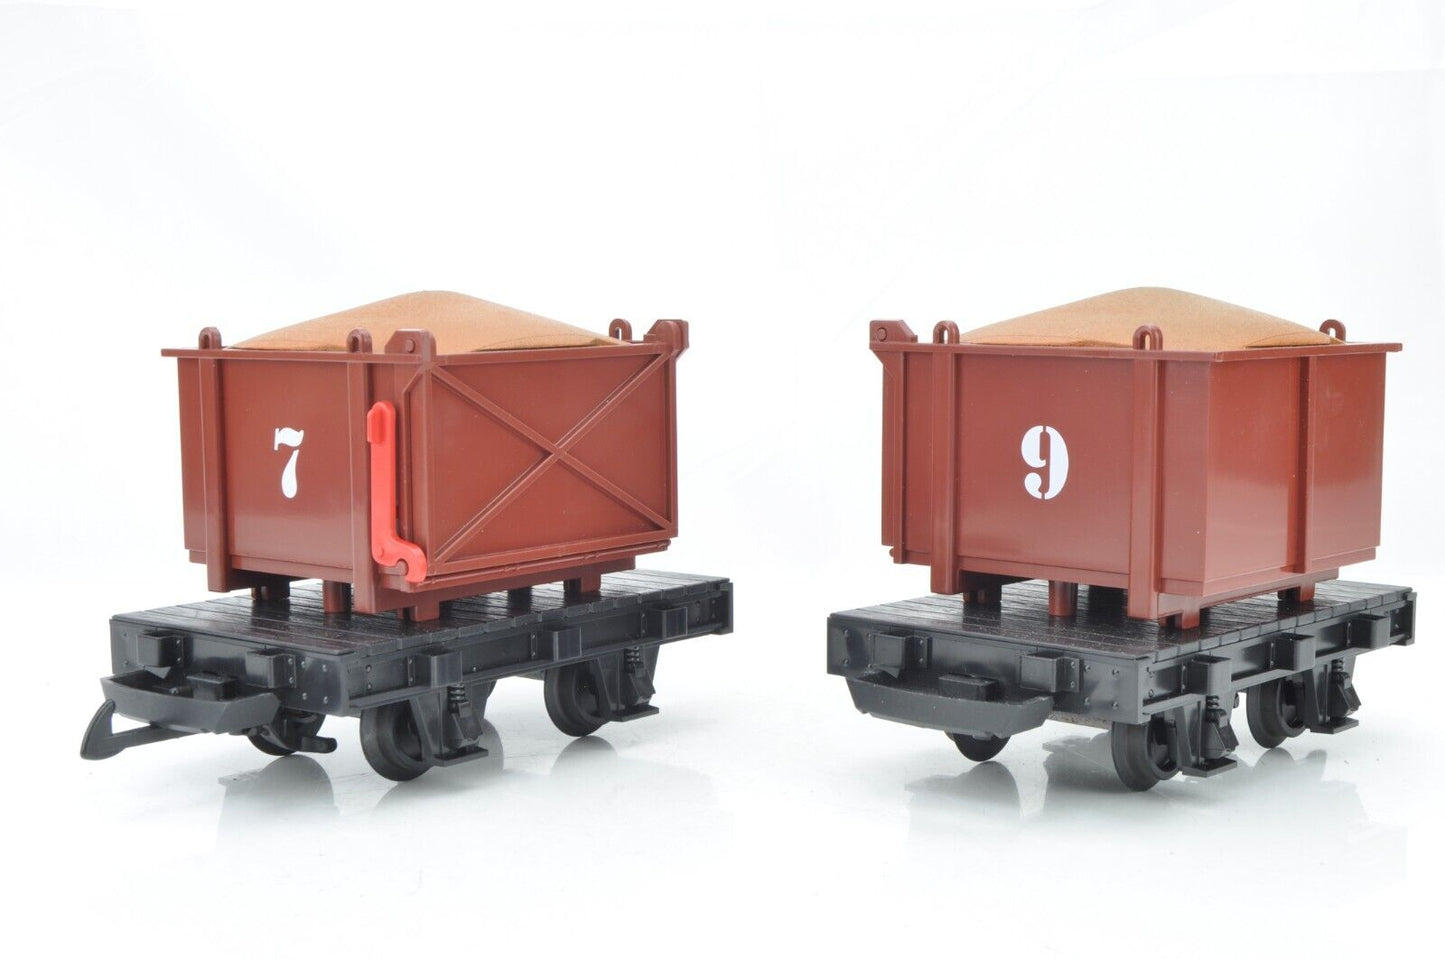 LGB Field Railroad Dump Cars, 2 pieces, Collection Item - 42170